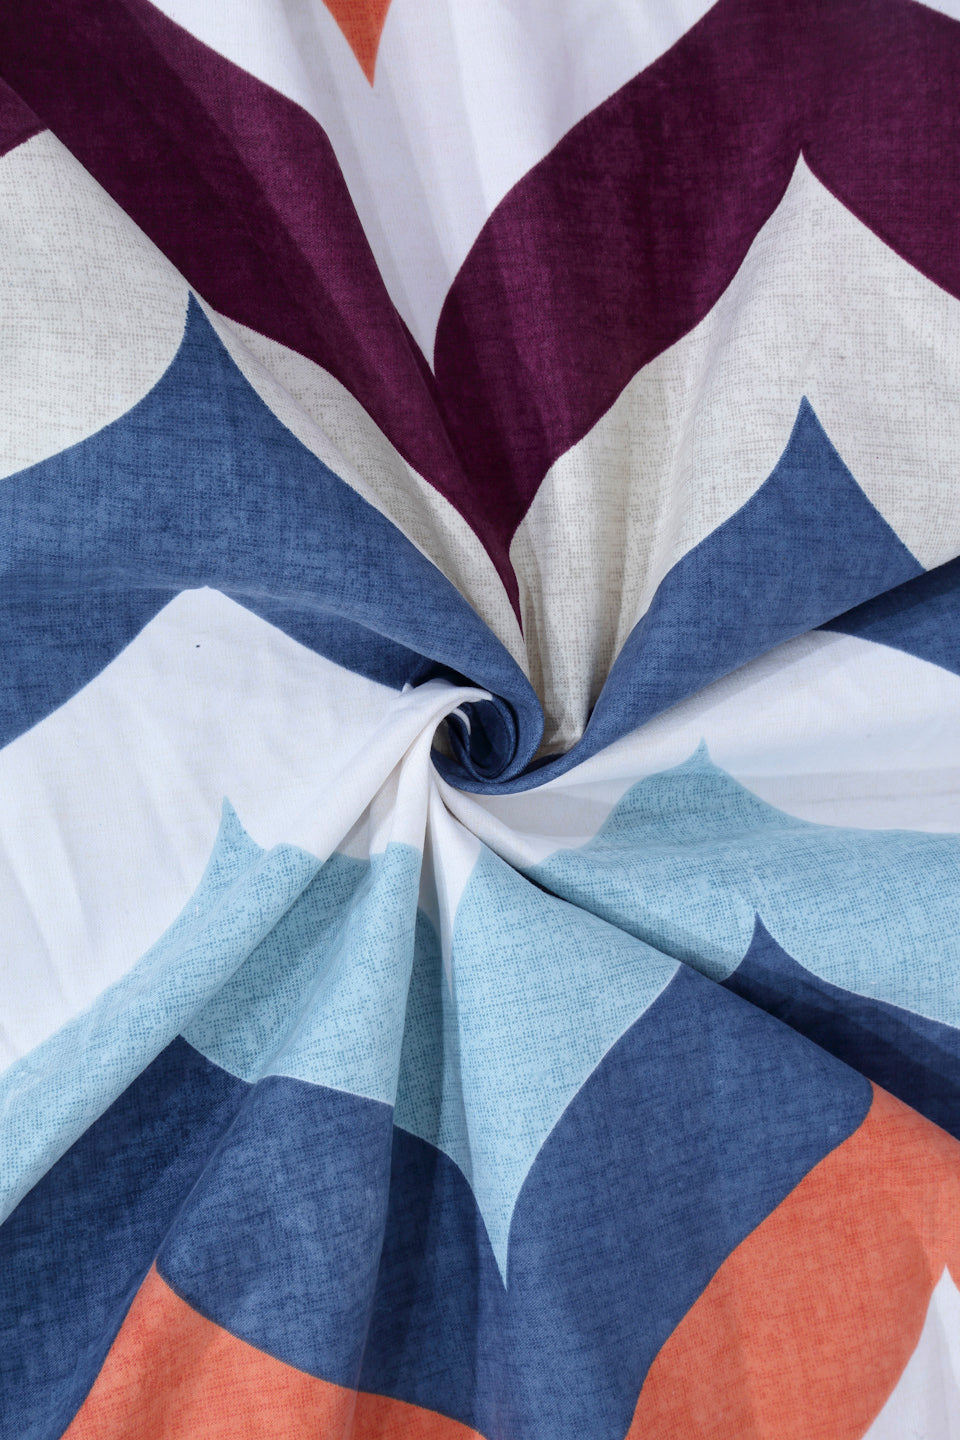 Arrabi Multi Indian TC Cotton Blend Double King Size Bedsheet with 2 Pillow Covers (270 x 260 cm)